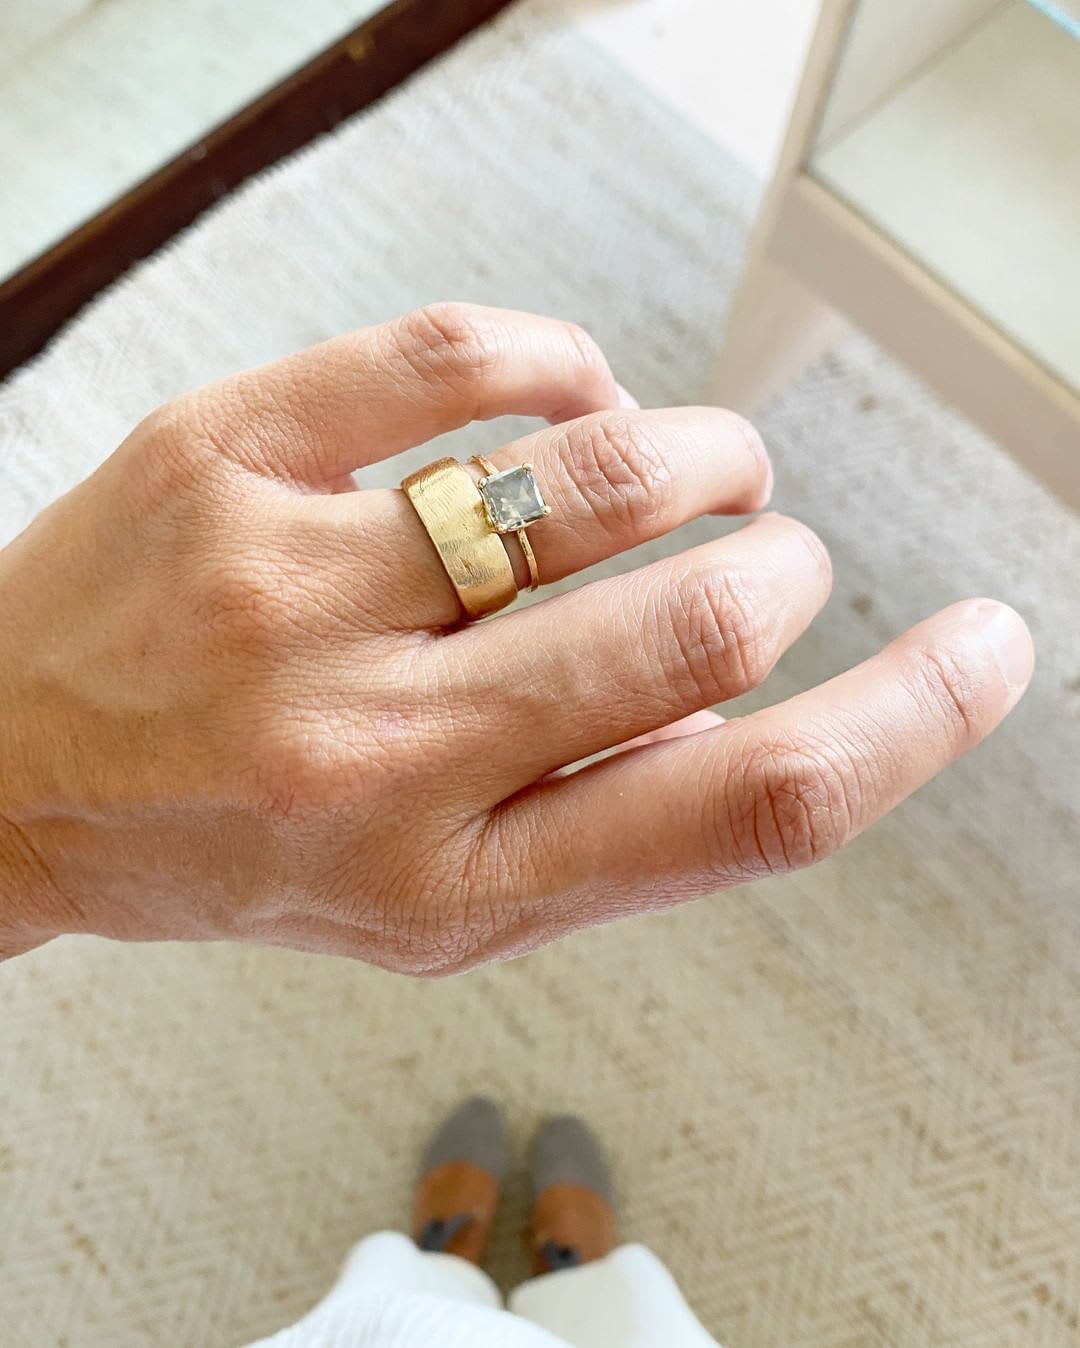 Jane Pope Jewelry on Instagram: “perfect pairing ✨⠀⠀⠀⠀⠀⠀⠀⠀⠀ ⠀⠀⠀⠀⠀⠀⠀⠀⠀ ⠀⠀⠀⠀⠀⠀⠀⠀⠀ #janepopeGILD #janepoperings #stackemup”